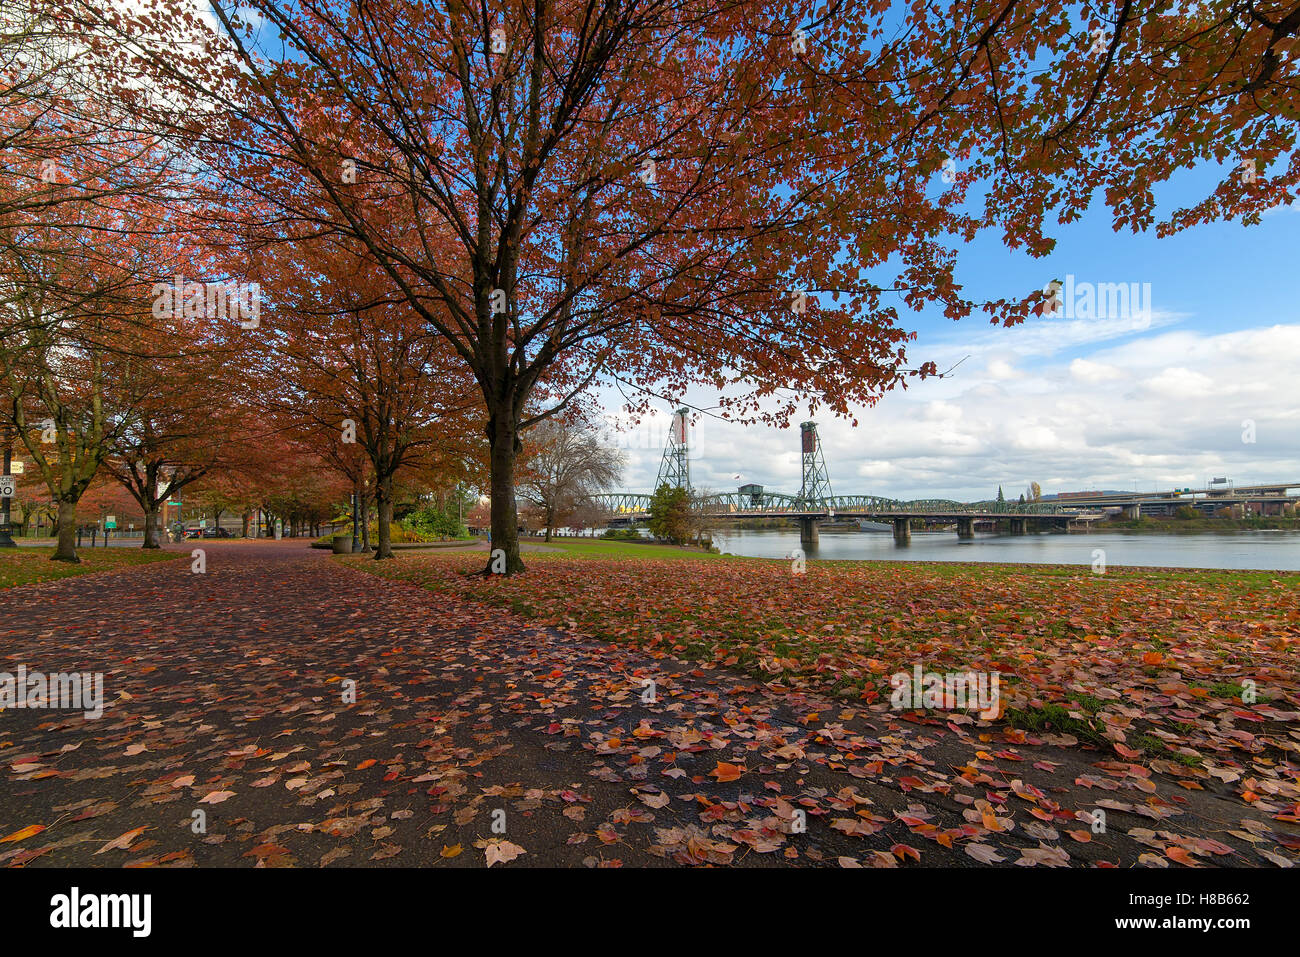 Portland Oregon city downtown waterfront park by Hawthorne Bridge in fall season Stock Photo